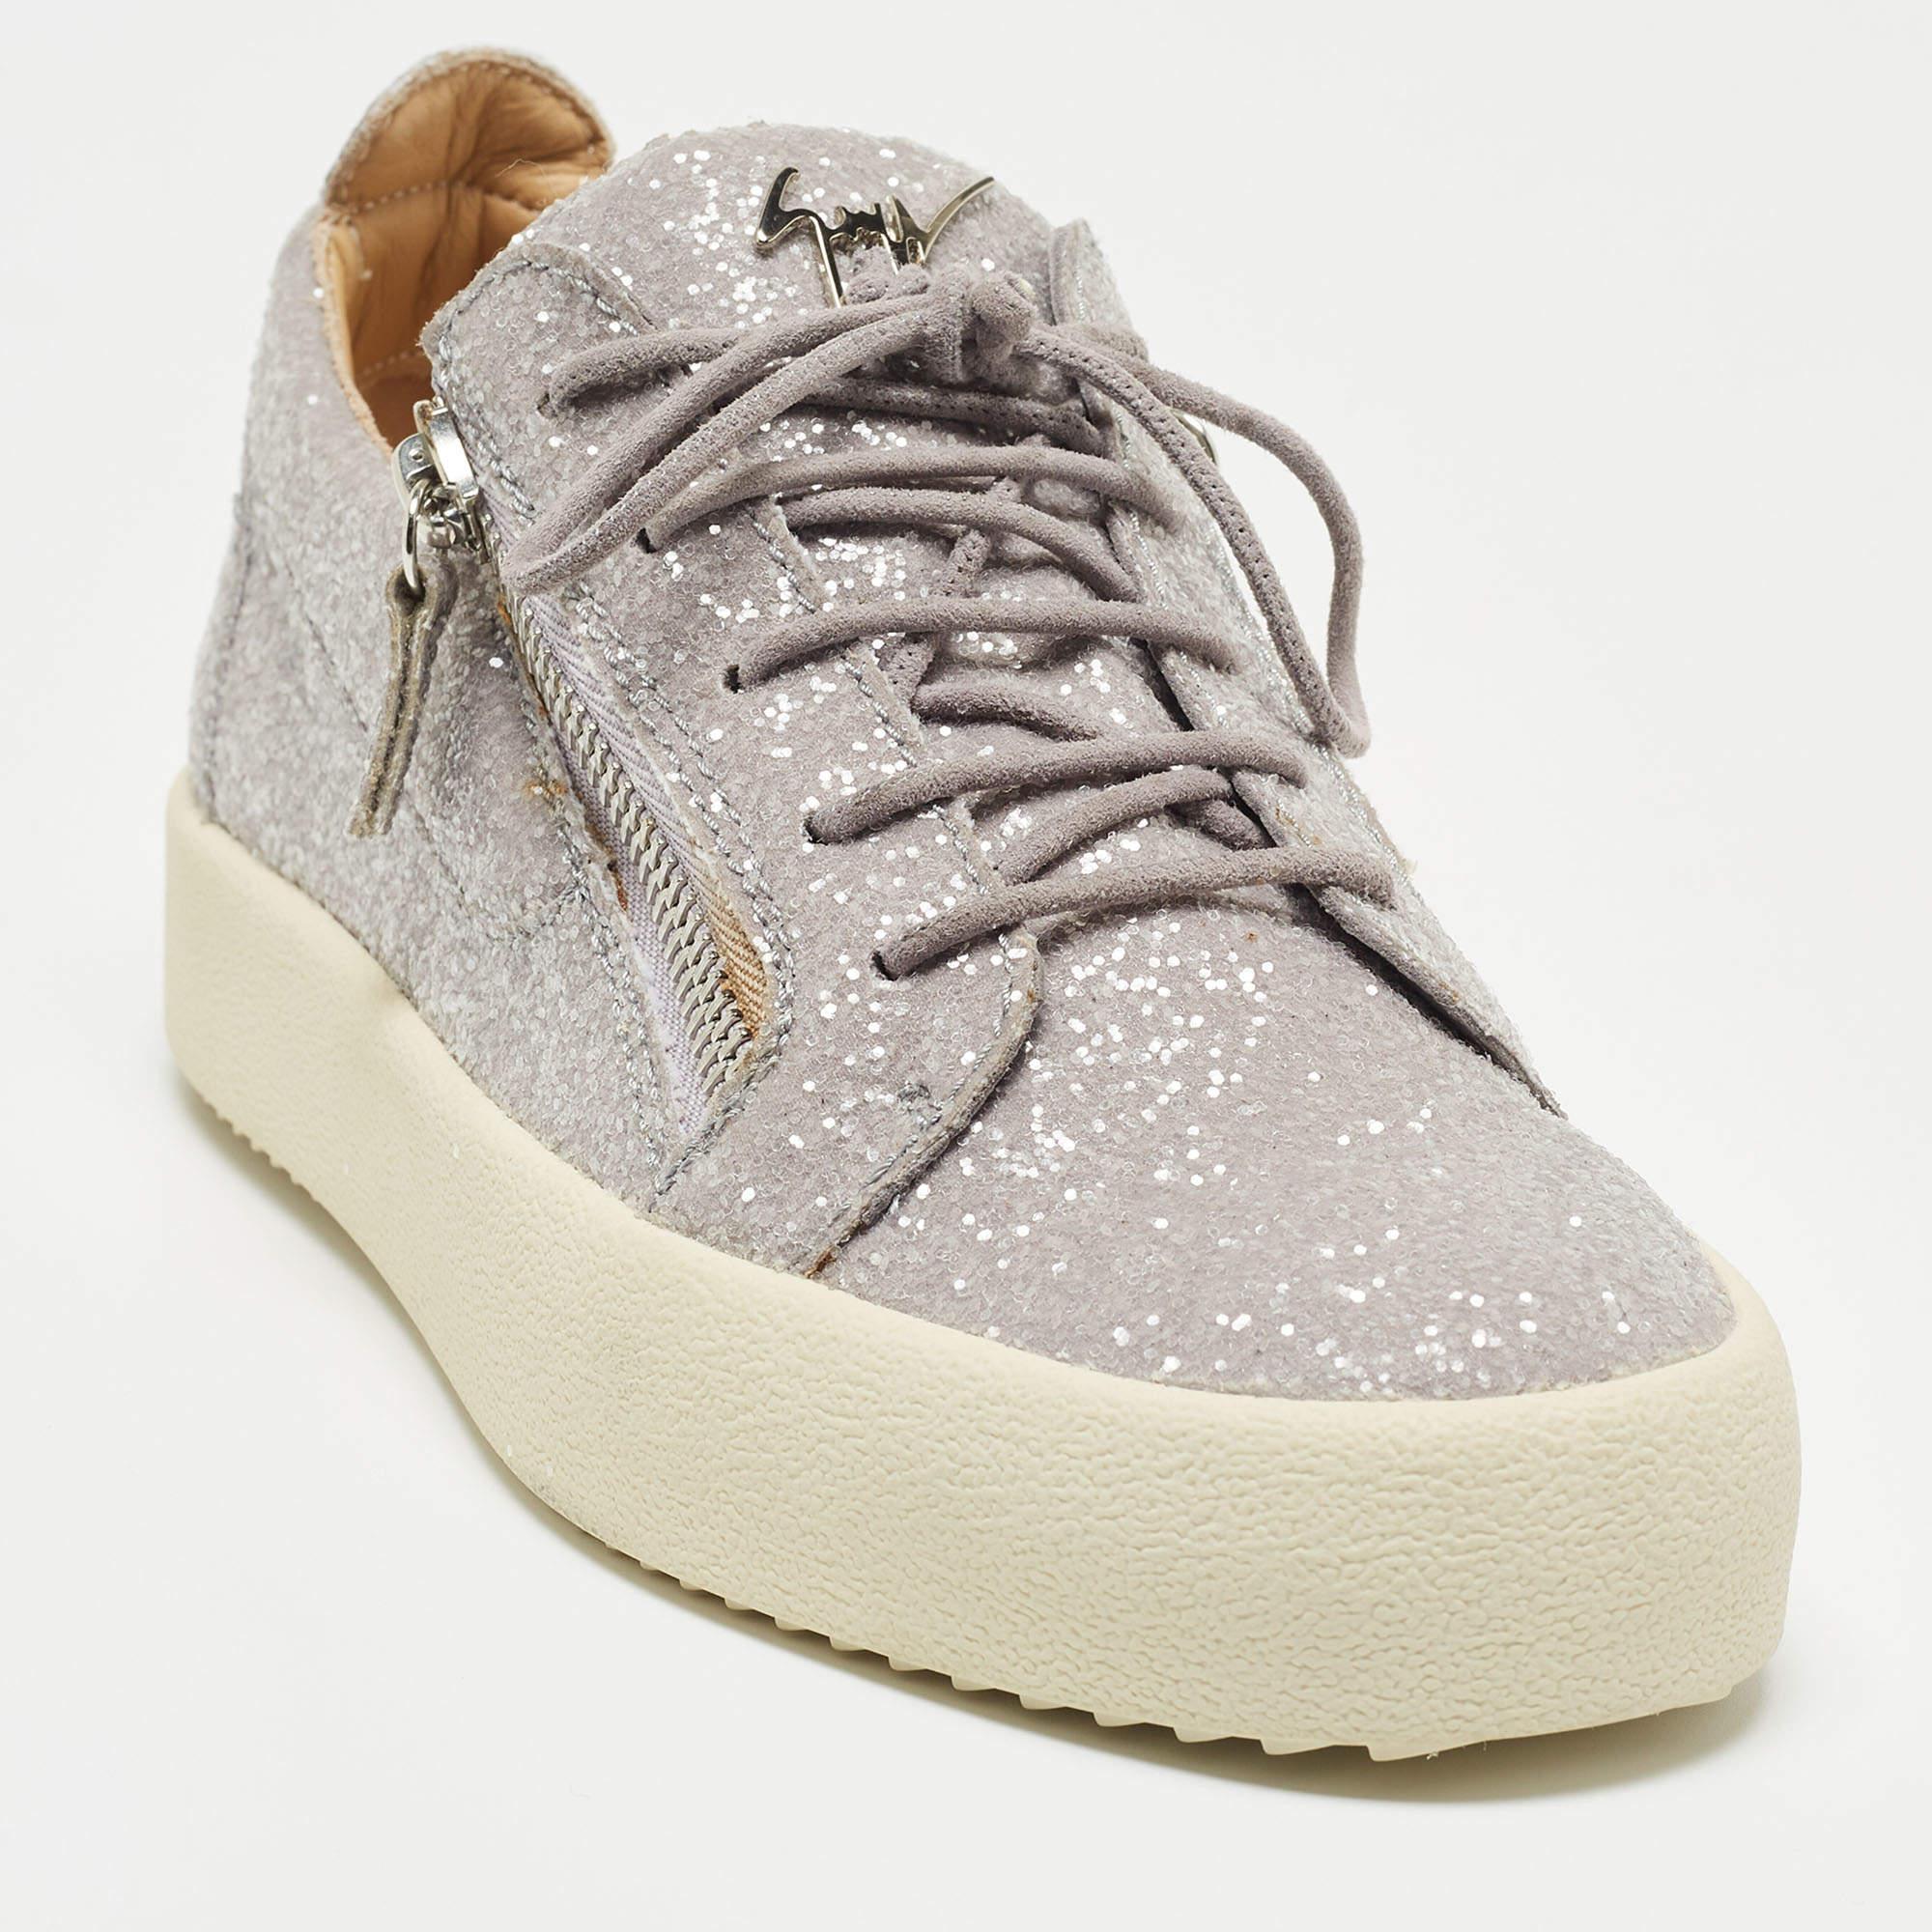 Giuseppe Zanotti Metallic Grey Suede Double Zip Low Top Sneakers Size 41 4